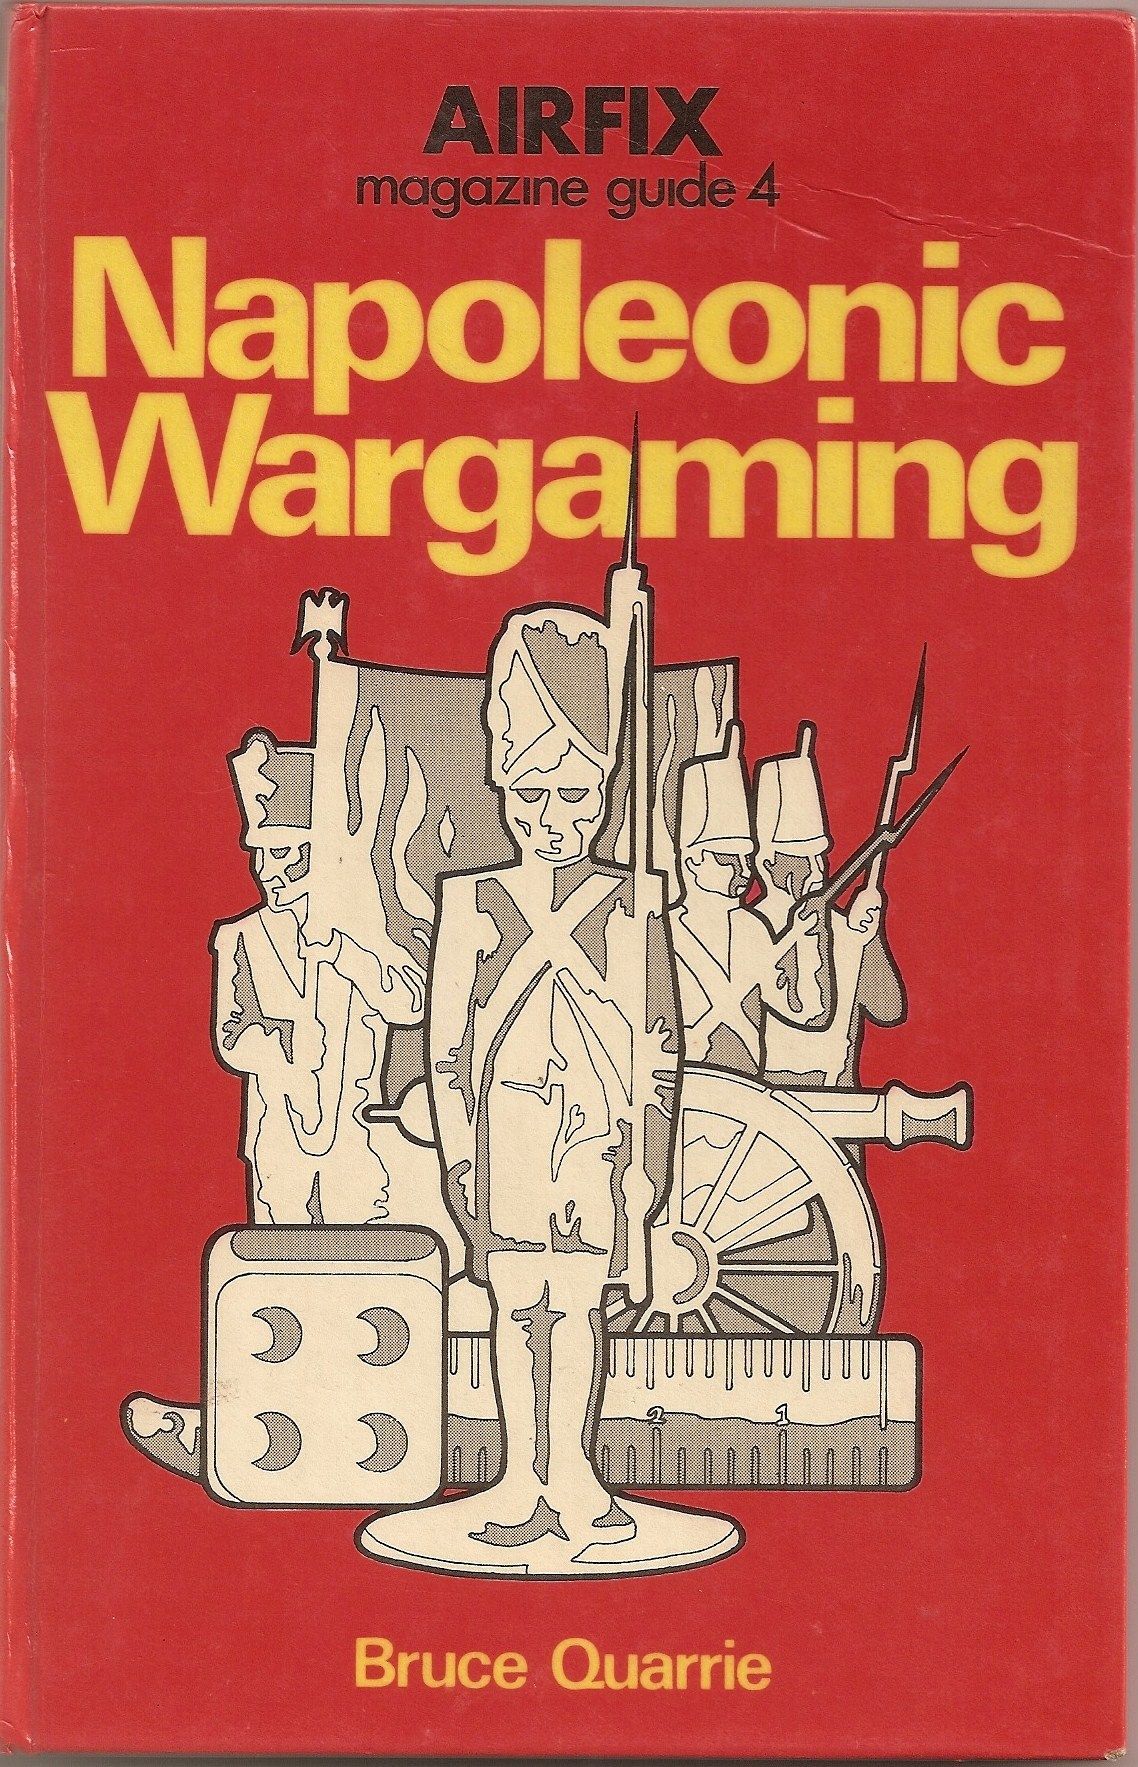 Napoleonic Wargaming